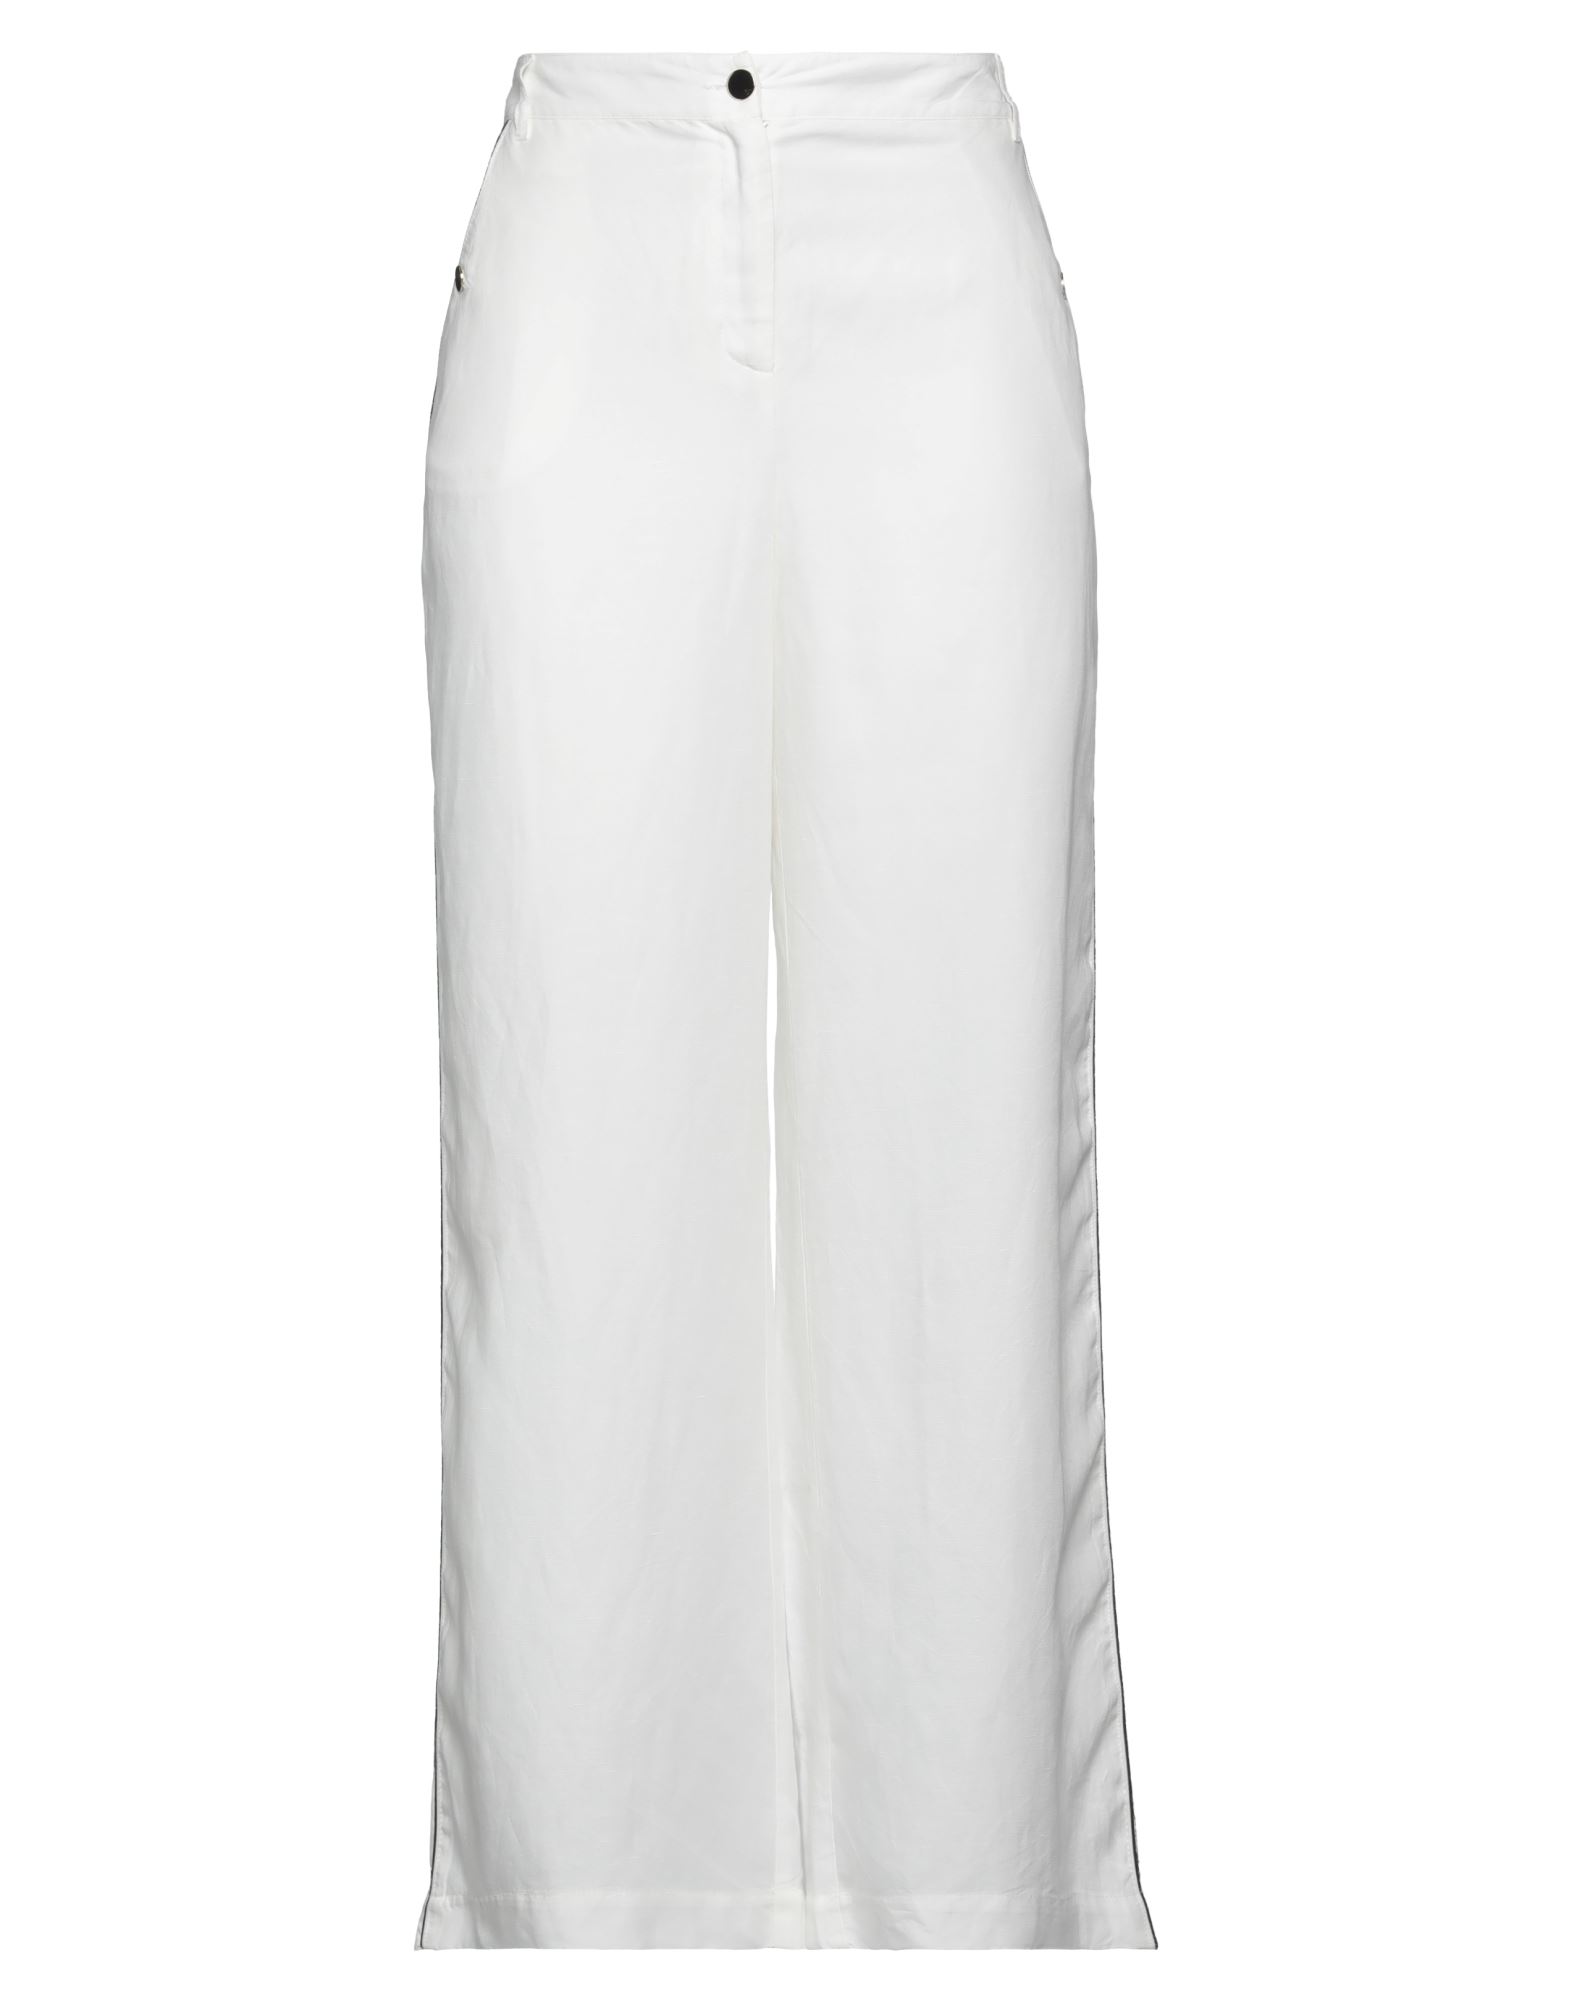 Pennyblack Pants In White